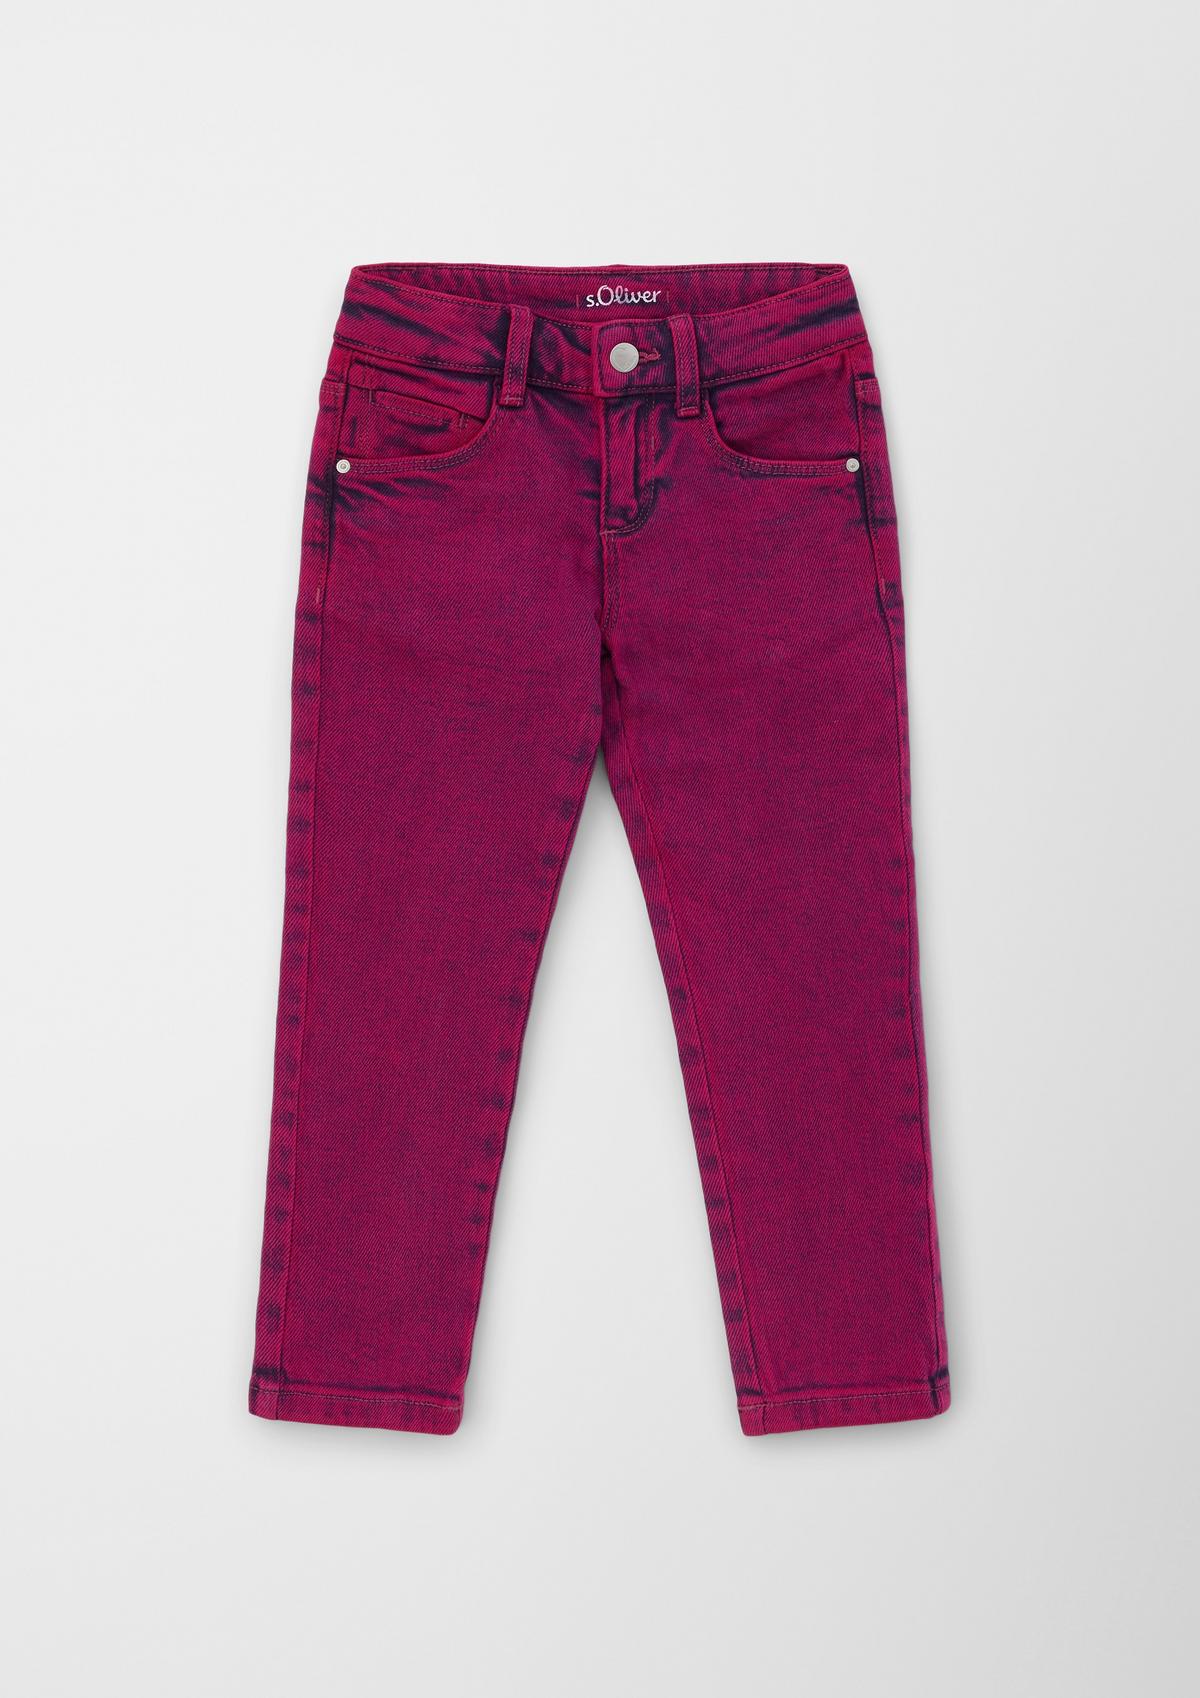 Jeans Kathy / Regular Fit / Mid Rise / Slim Leg